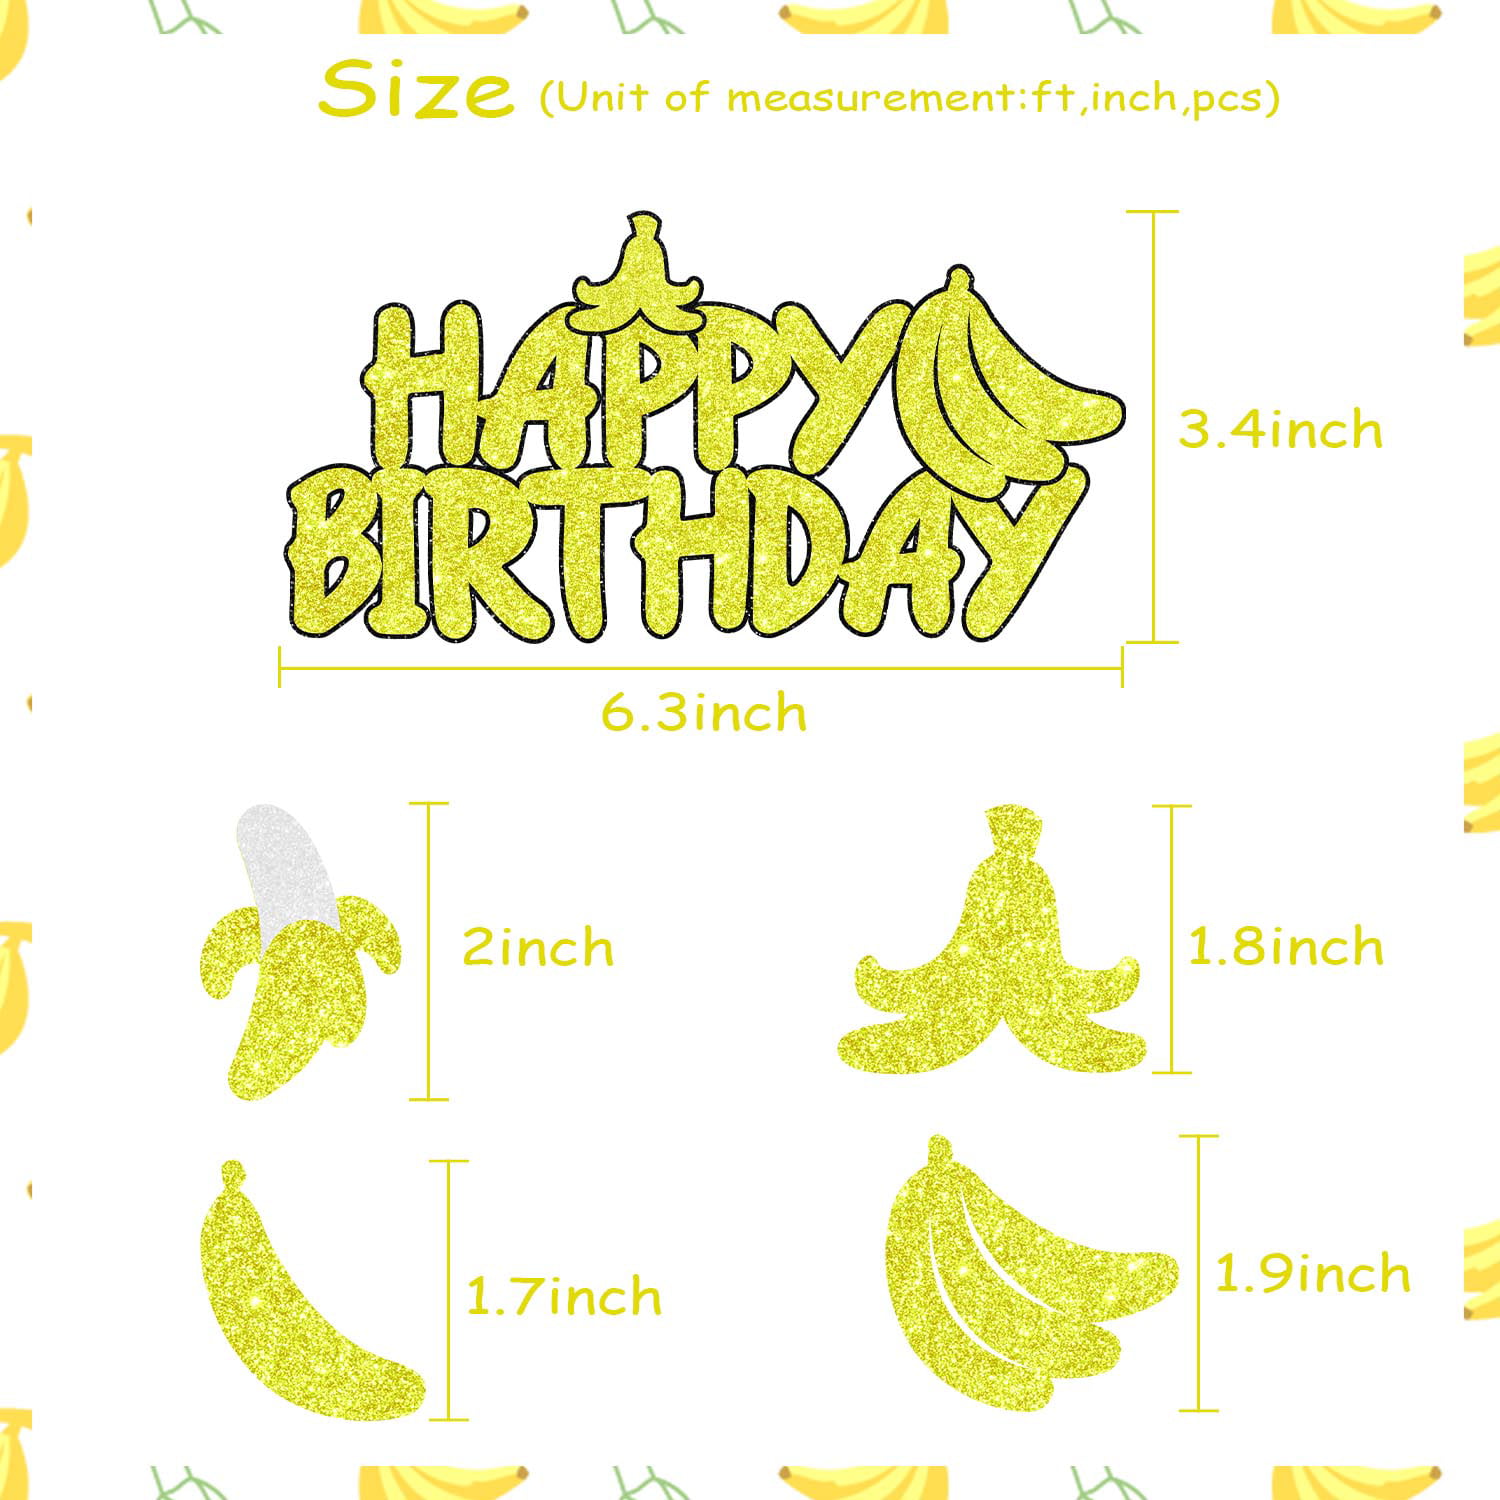 Banana Birthday Cake (Recipe Video+Step-by-Step Guide) - ProperFoodie